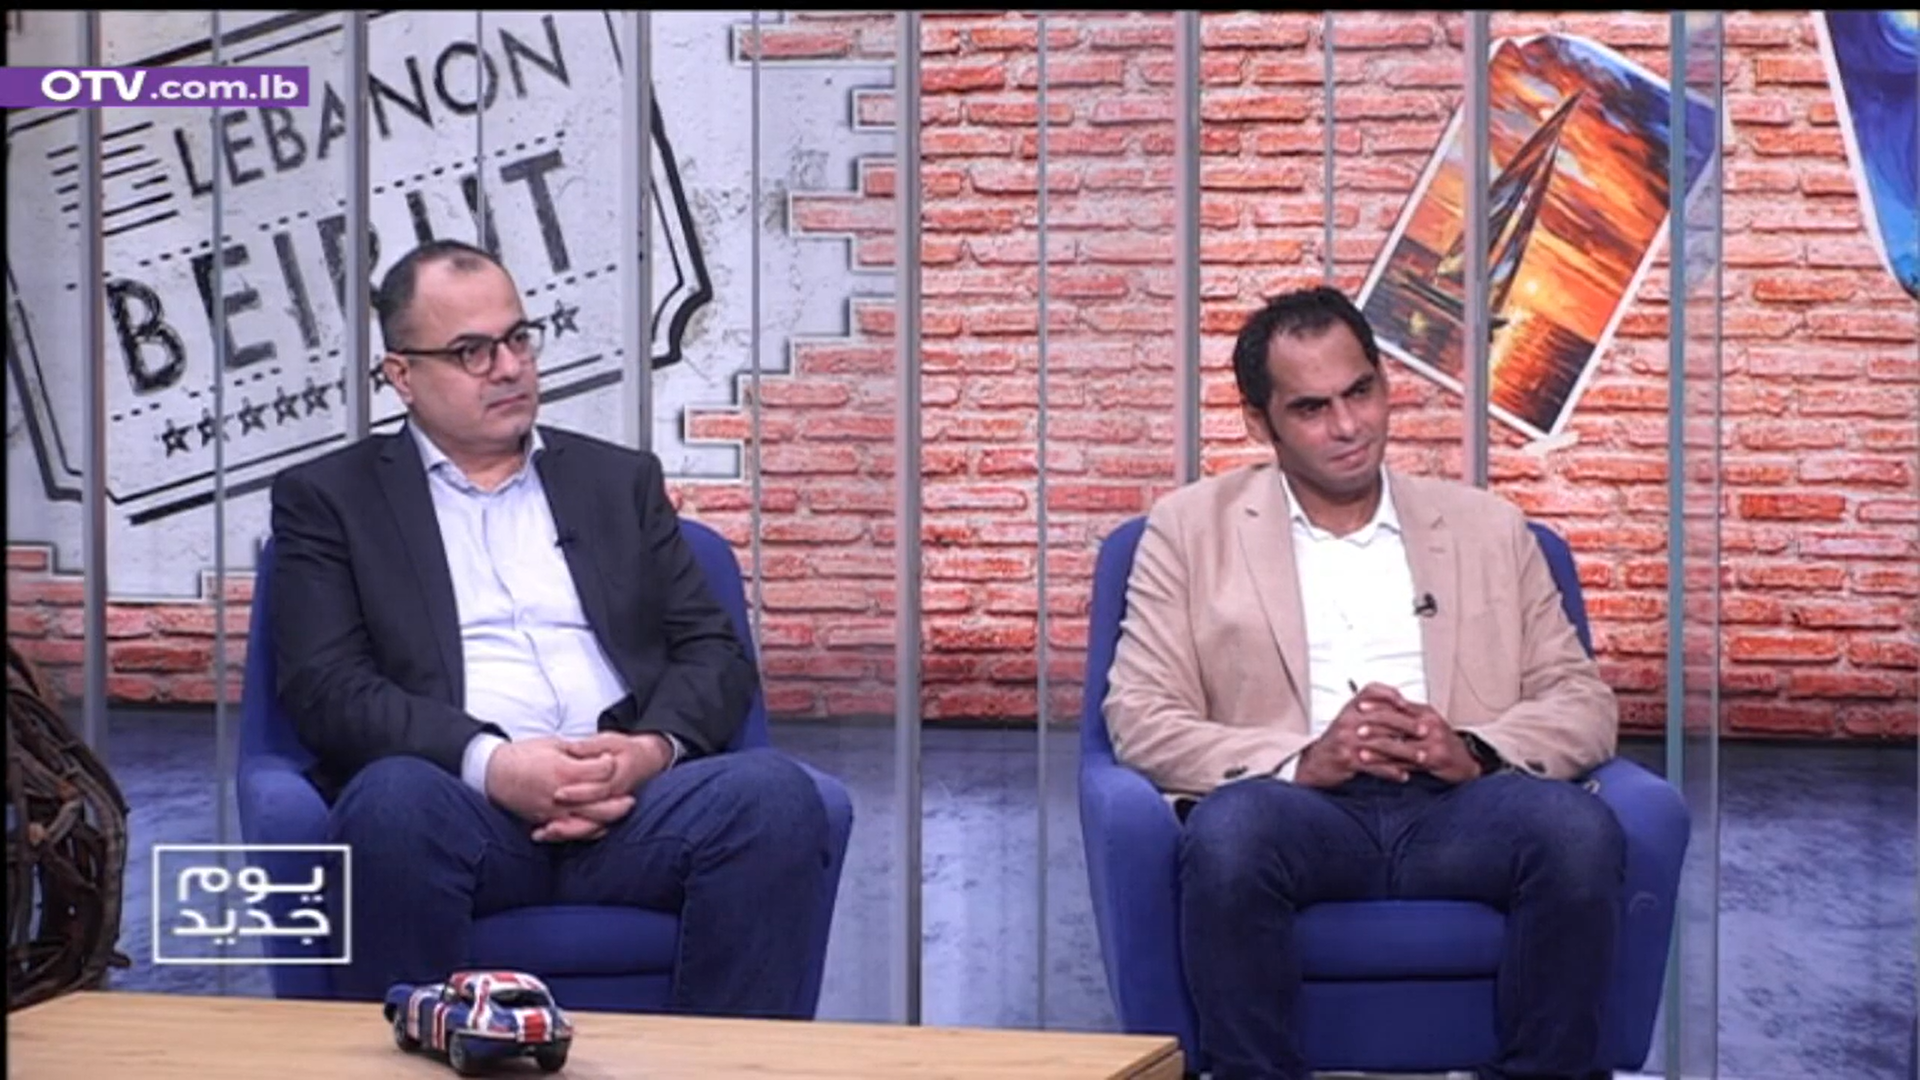 Hany Nassar and Anwar Elkamony were interviewed on the Lebanese OTV channel.